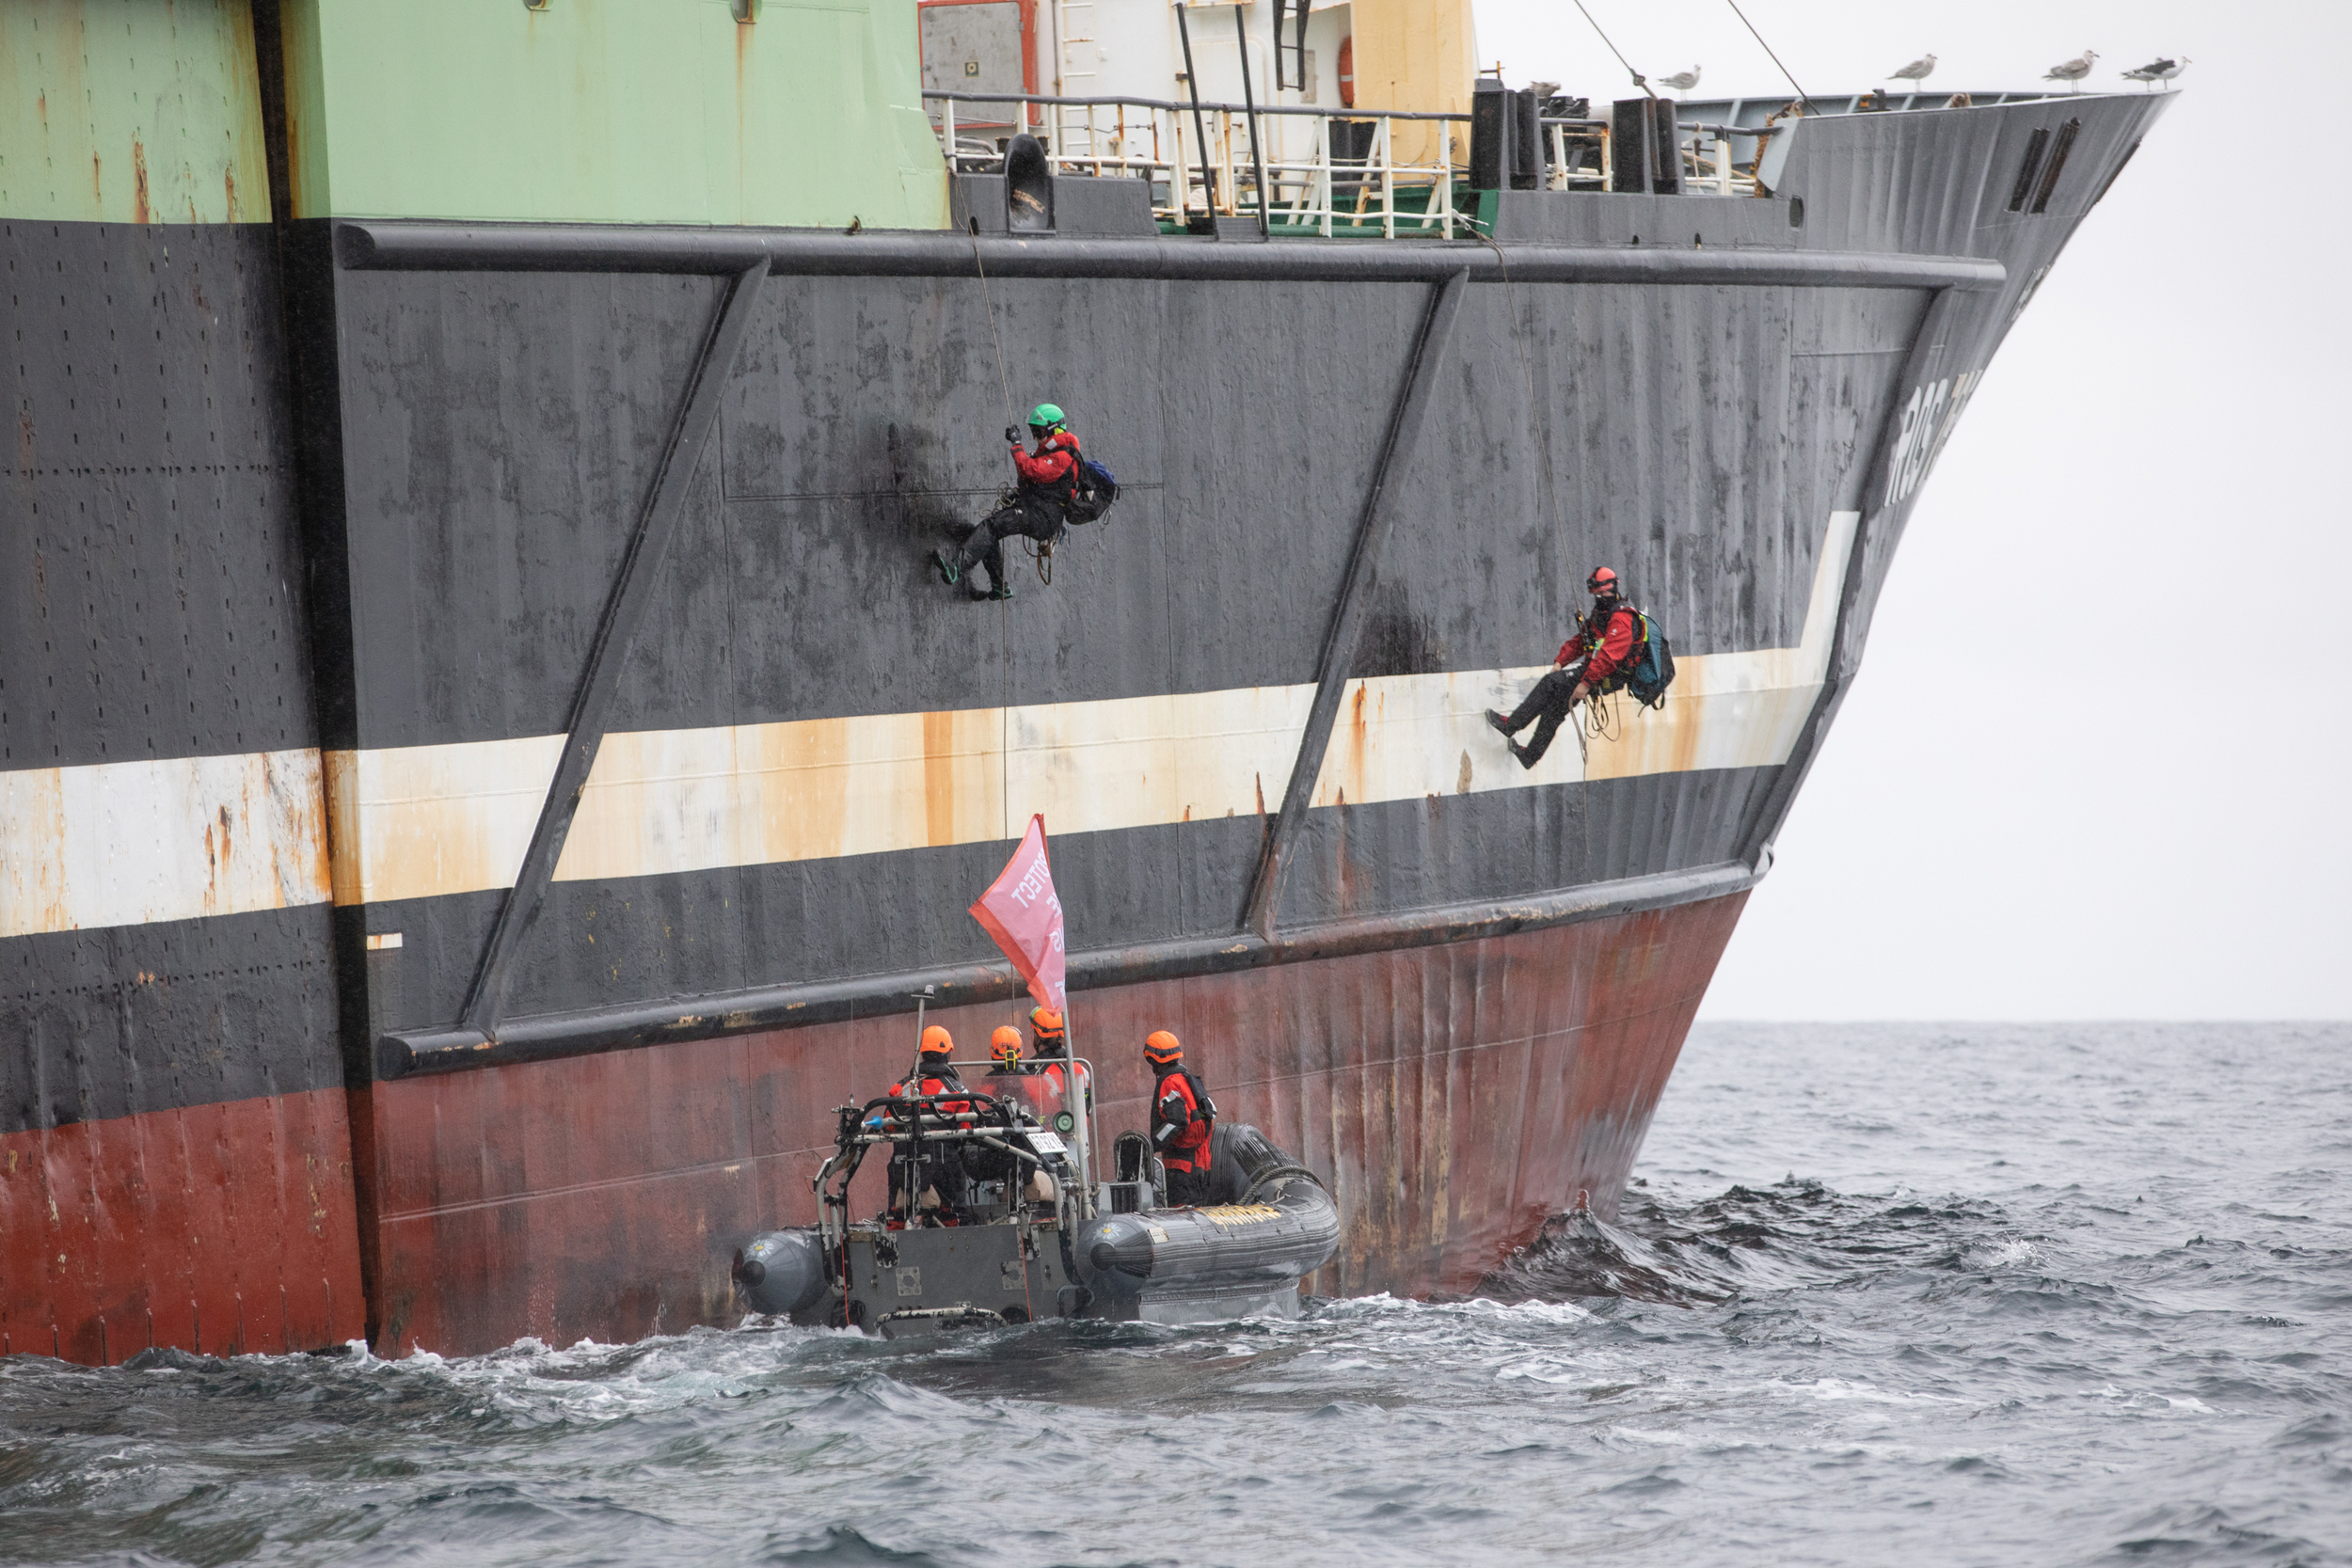 Greenpeace activists board the Helen Mary supertrawler 